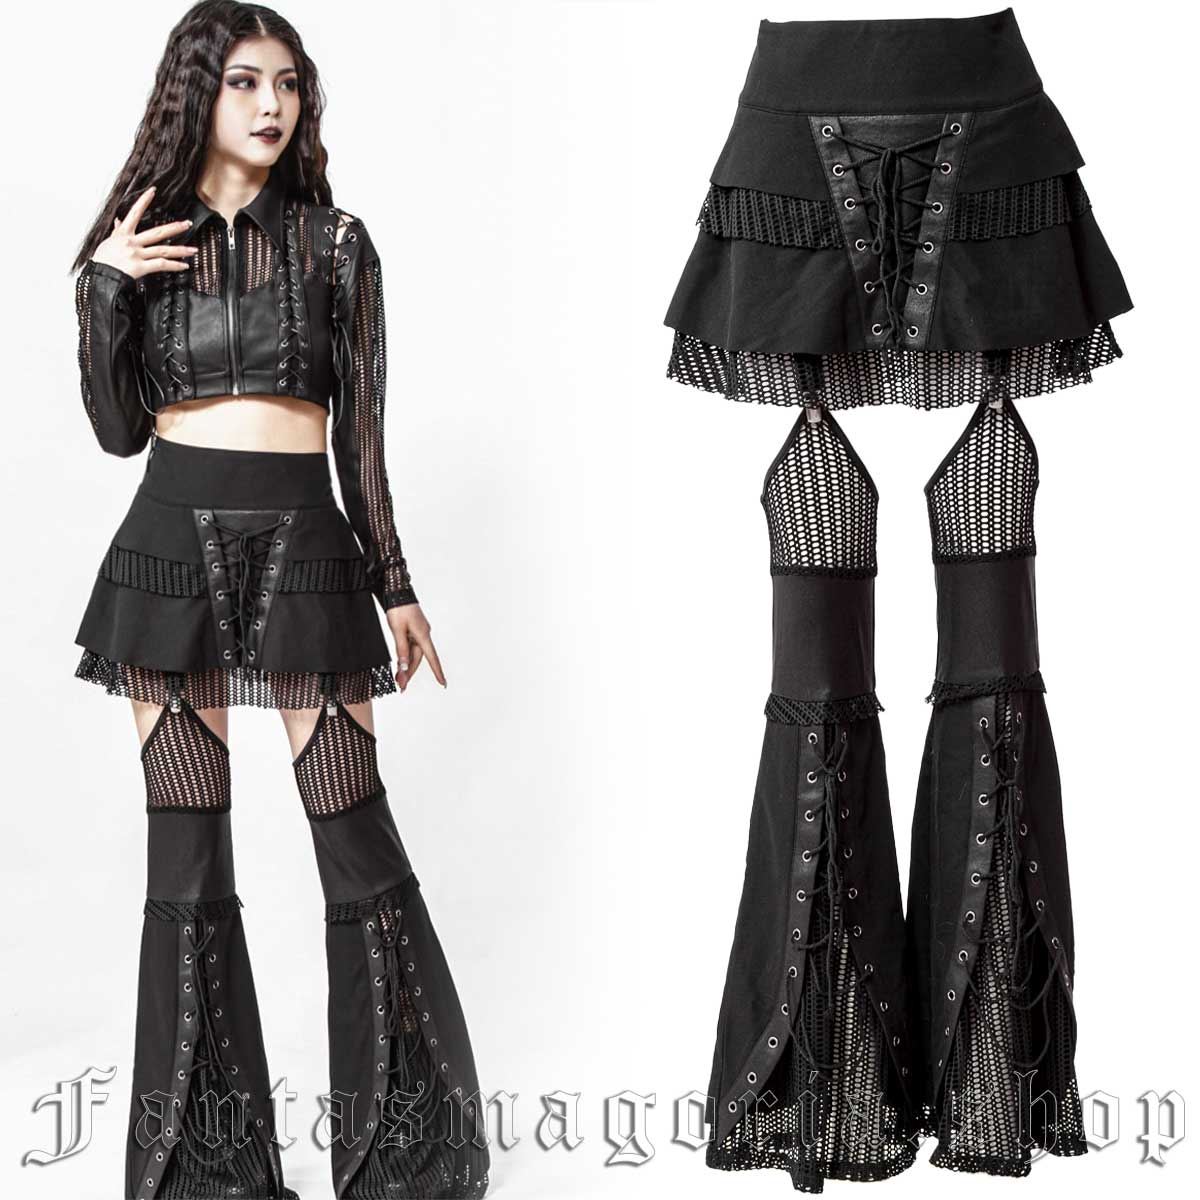 Women's Gothic black A-line mini skirt with legwarmers. - RNG - SK306BK